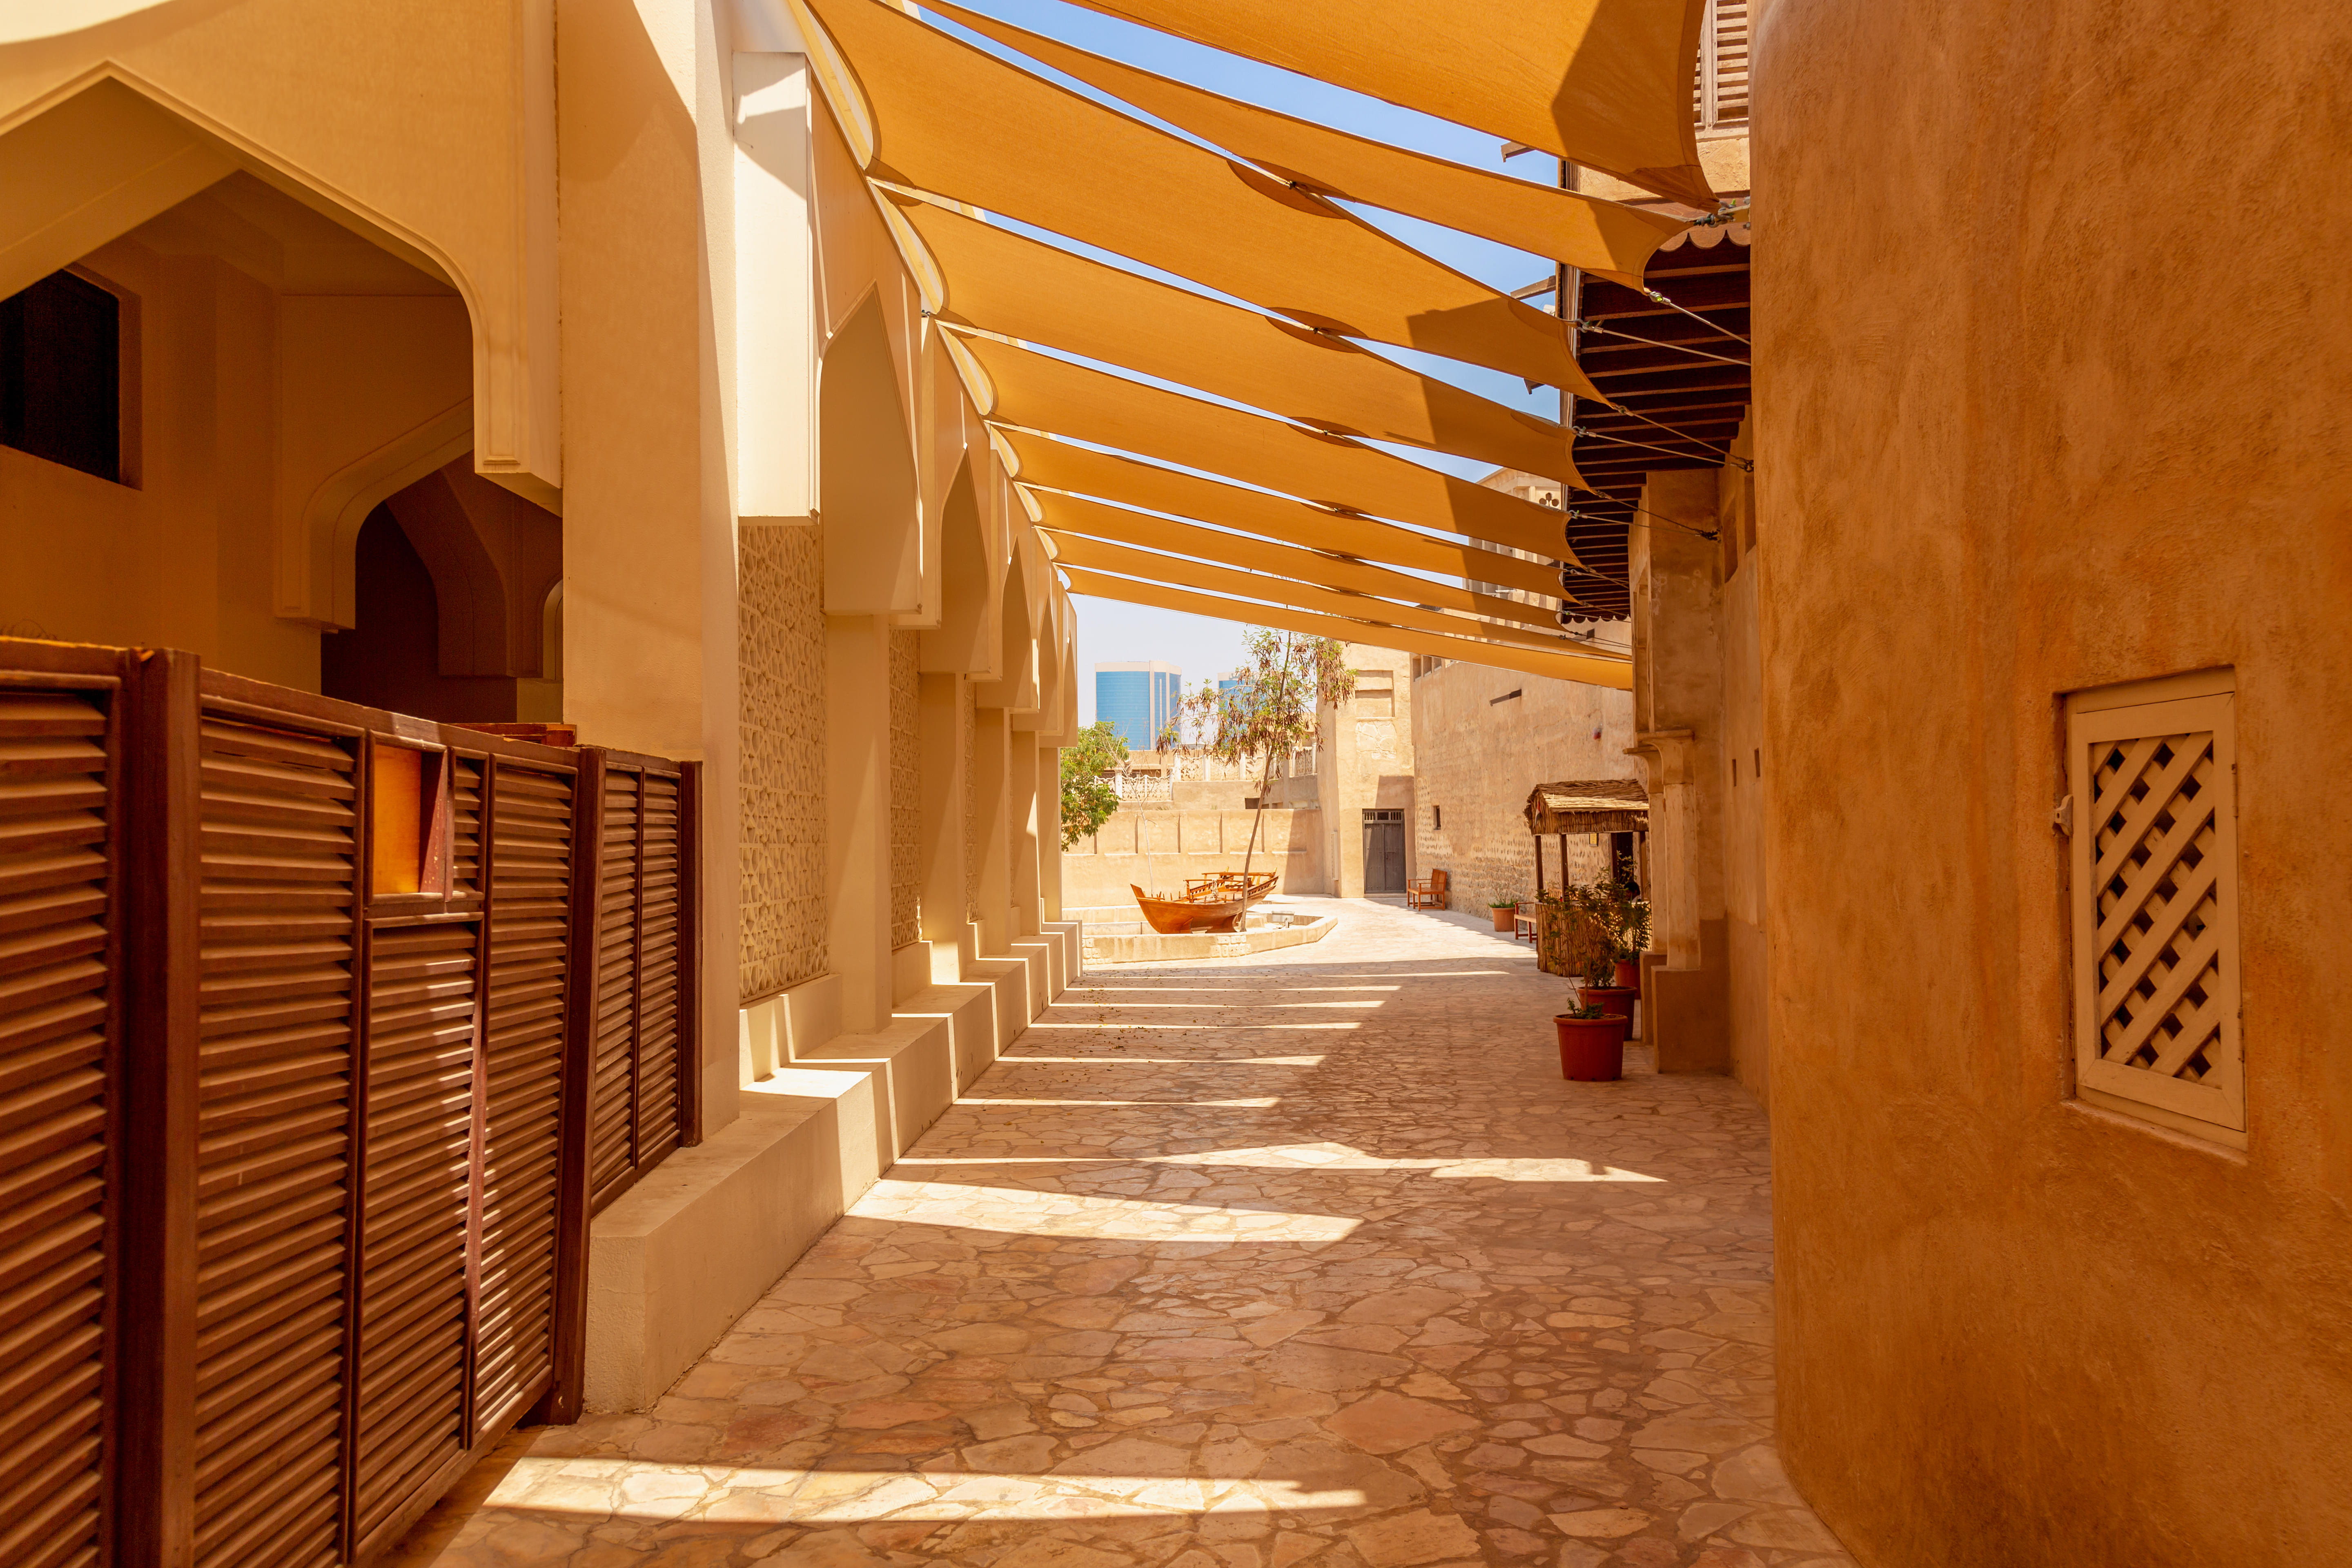  Take a walk around the old Al Bastakiya Quarter